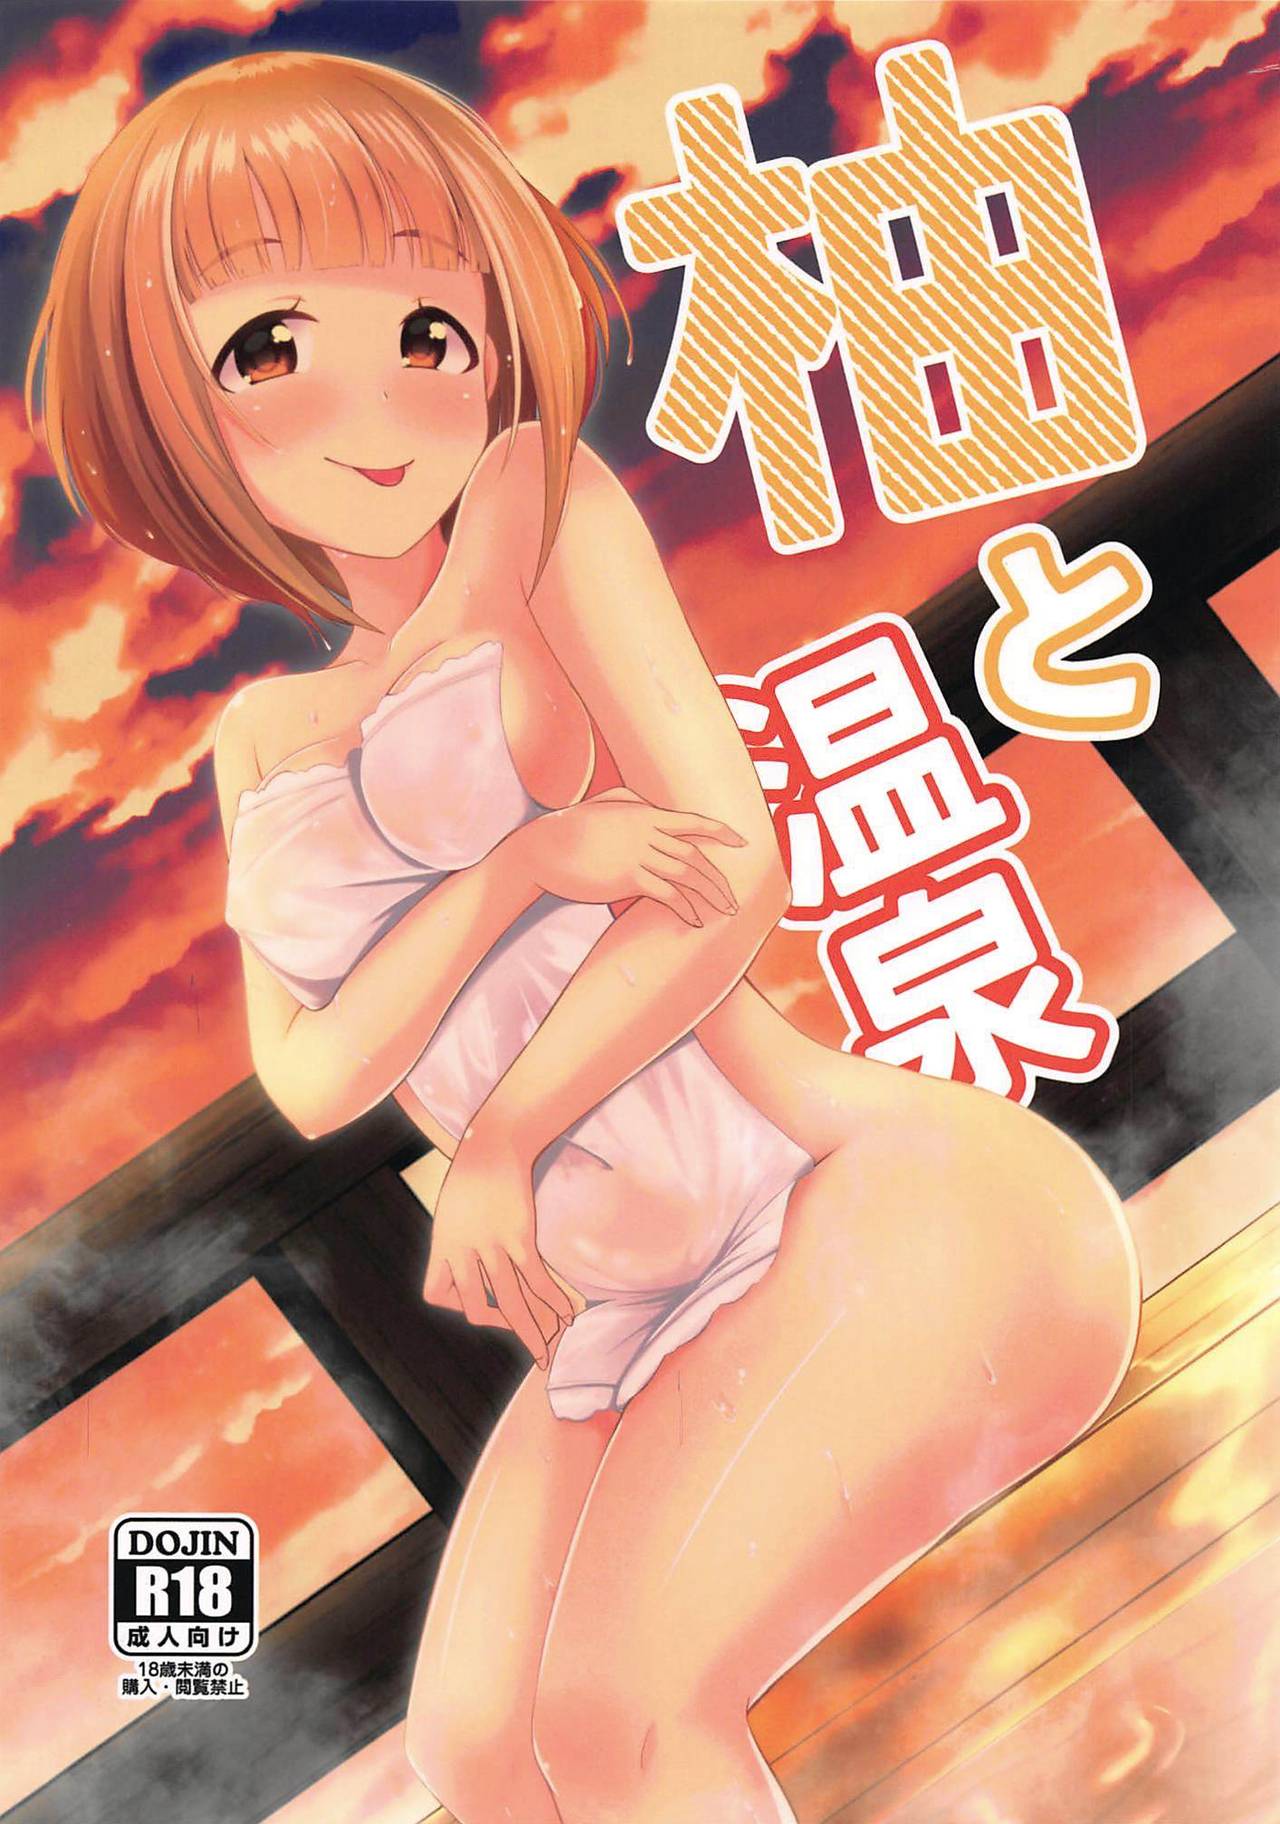 6162 Xx - Read Porn Comic Porn Comics Â» Page 6162 Of 43610 Â» Hentai Porns - Manga And  Porncomics Xxx 6162 Hentai Comics